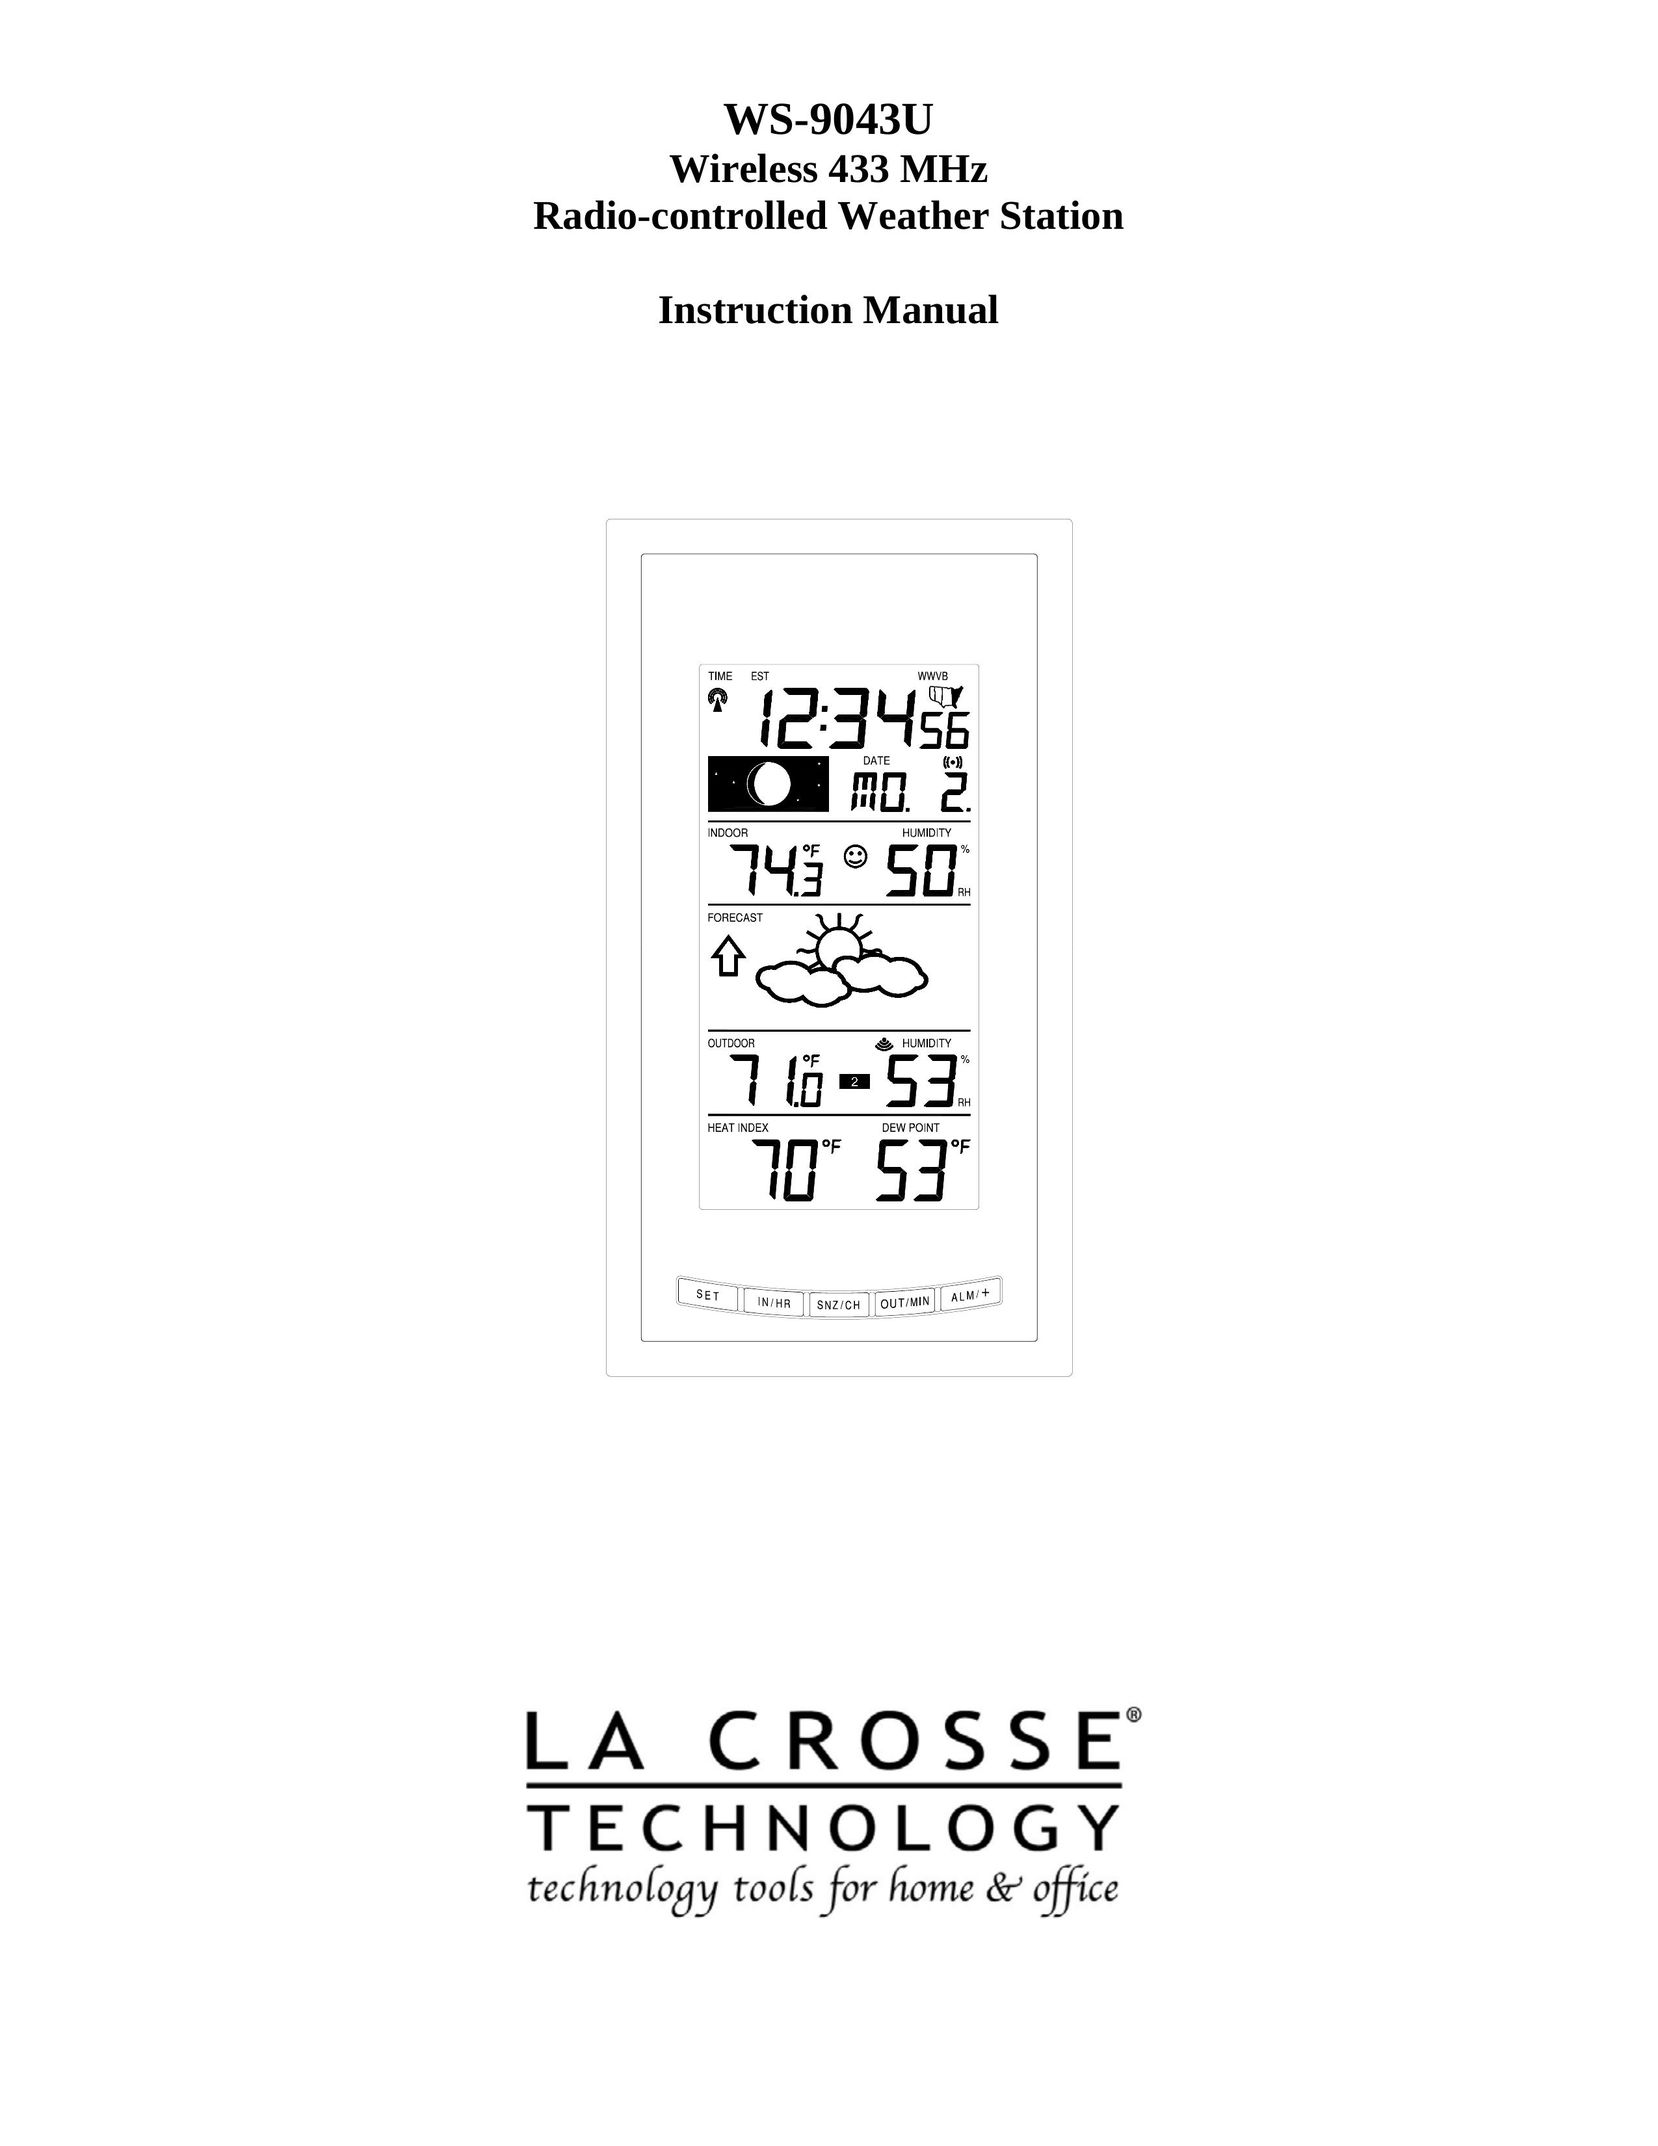 La Crosse Technology WS-9043U Thermostat User Manual